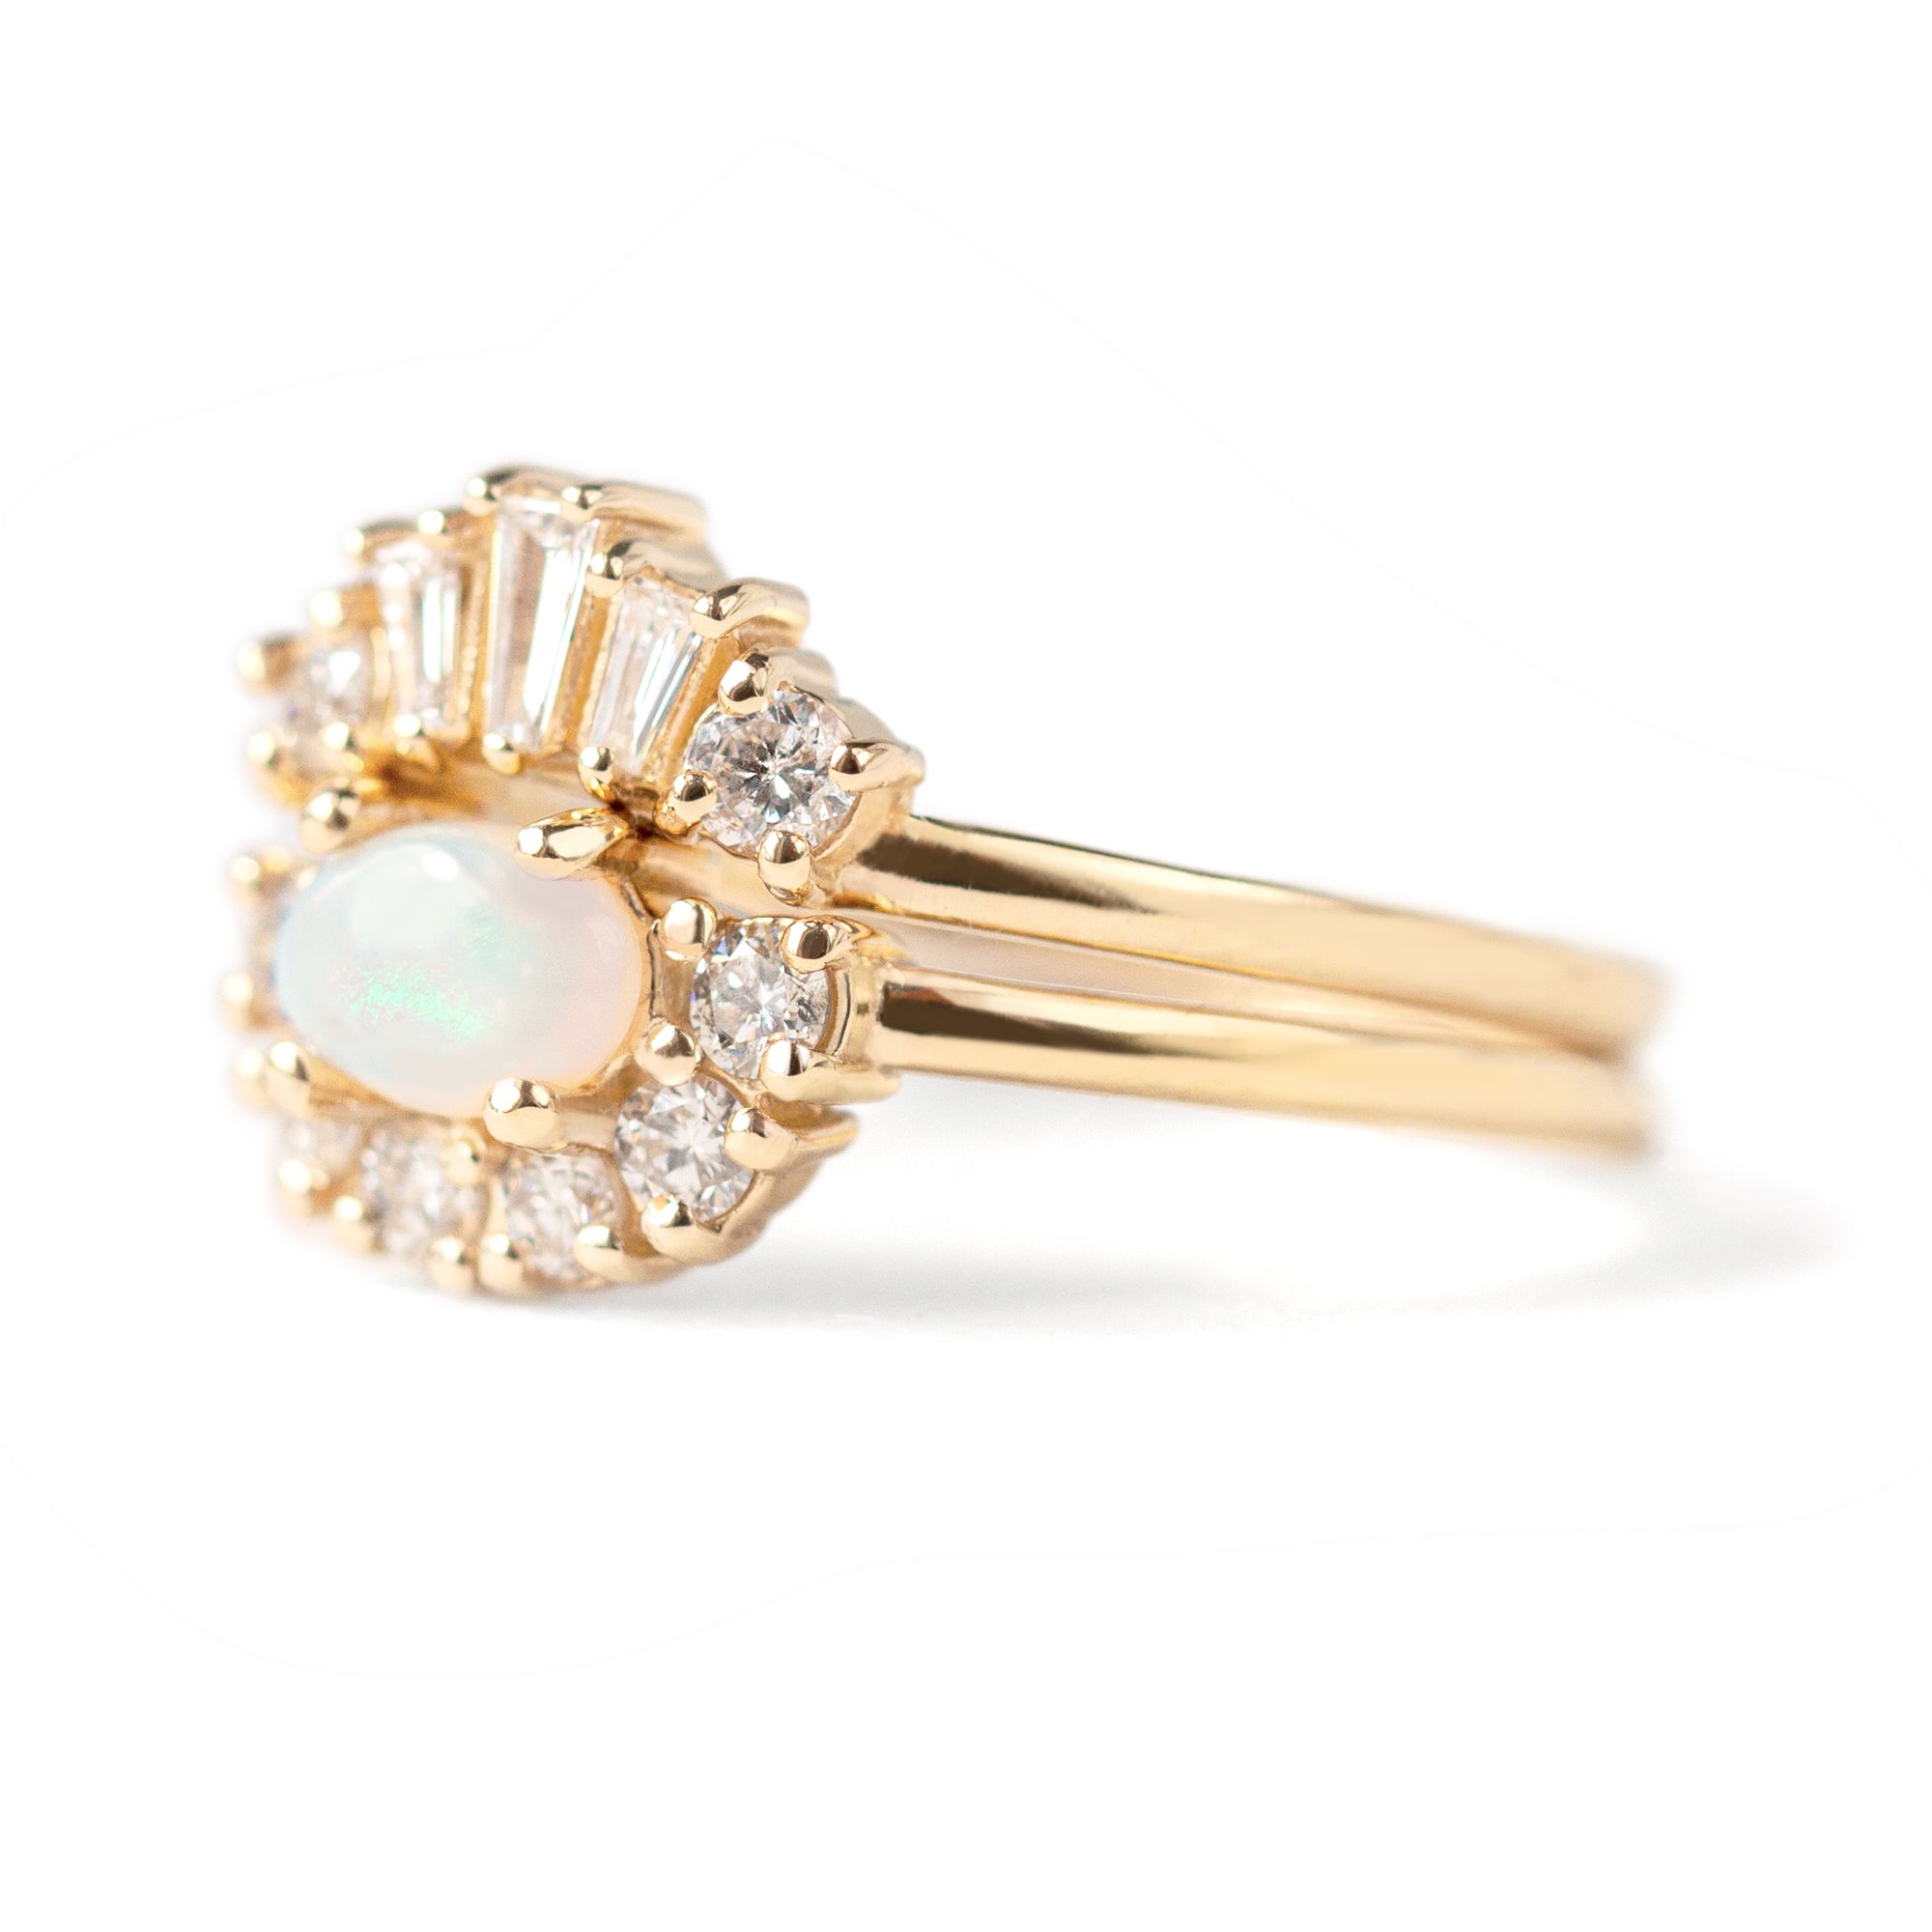 Oval Opal Diamond Ring Set